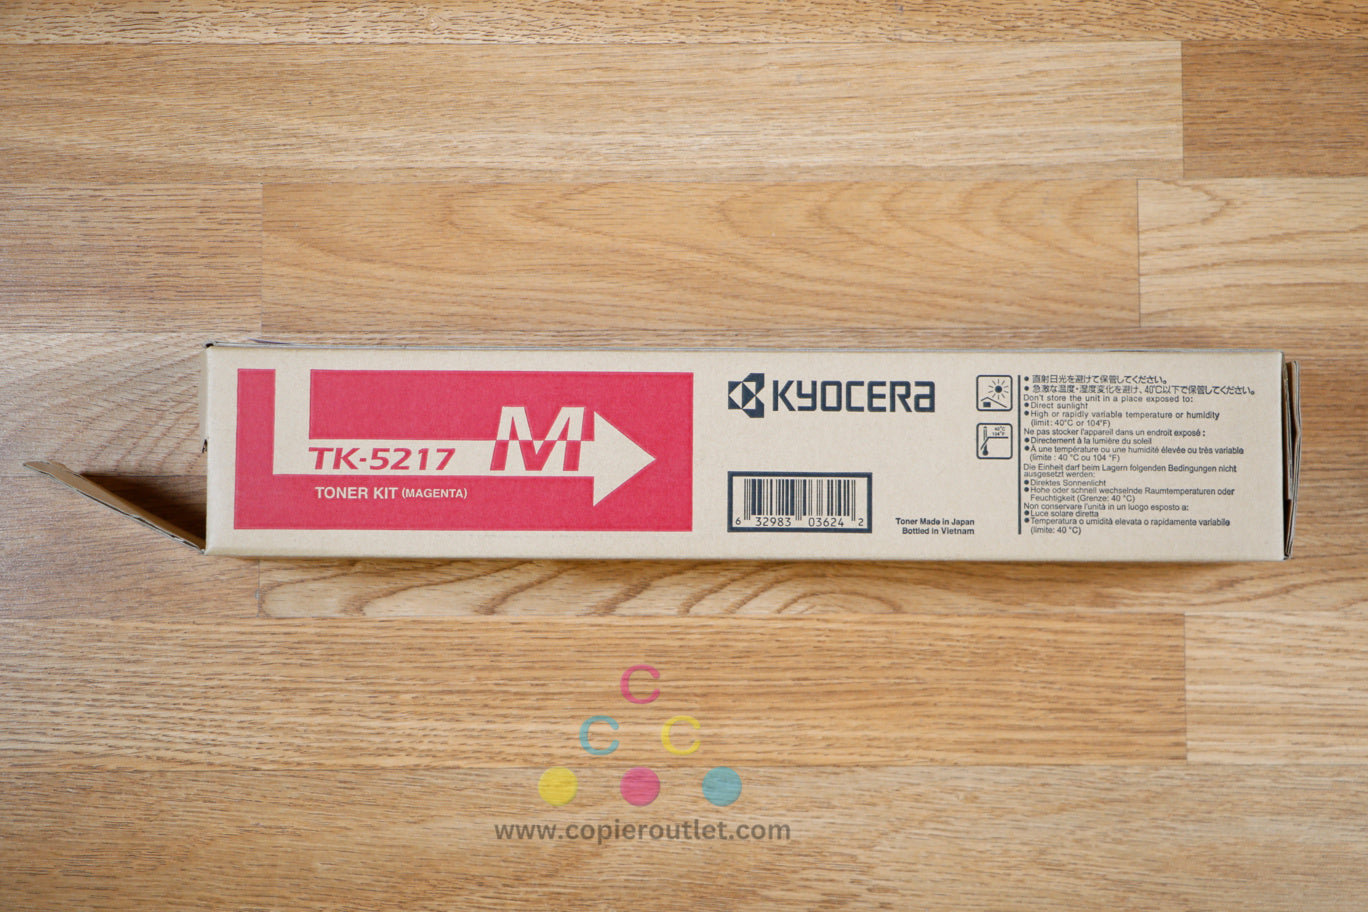 Open Kyocera TK-5217 Magenta Toner Cartridges TASKalfa 406ci Same Day Shipping!!